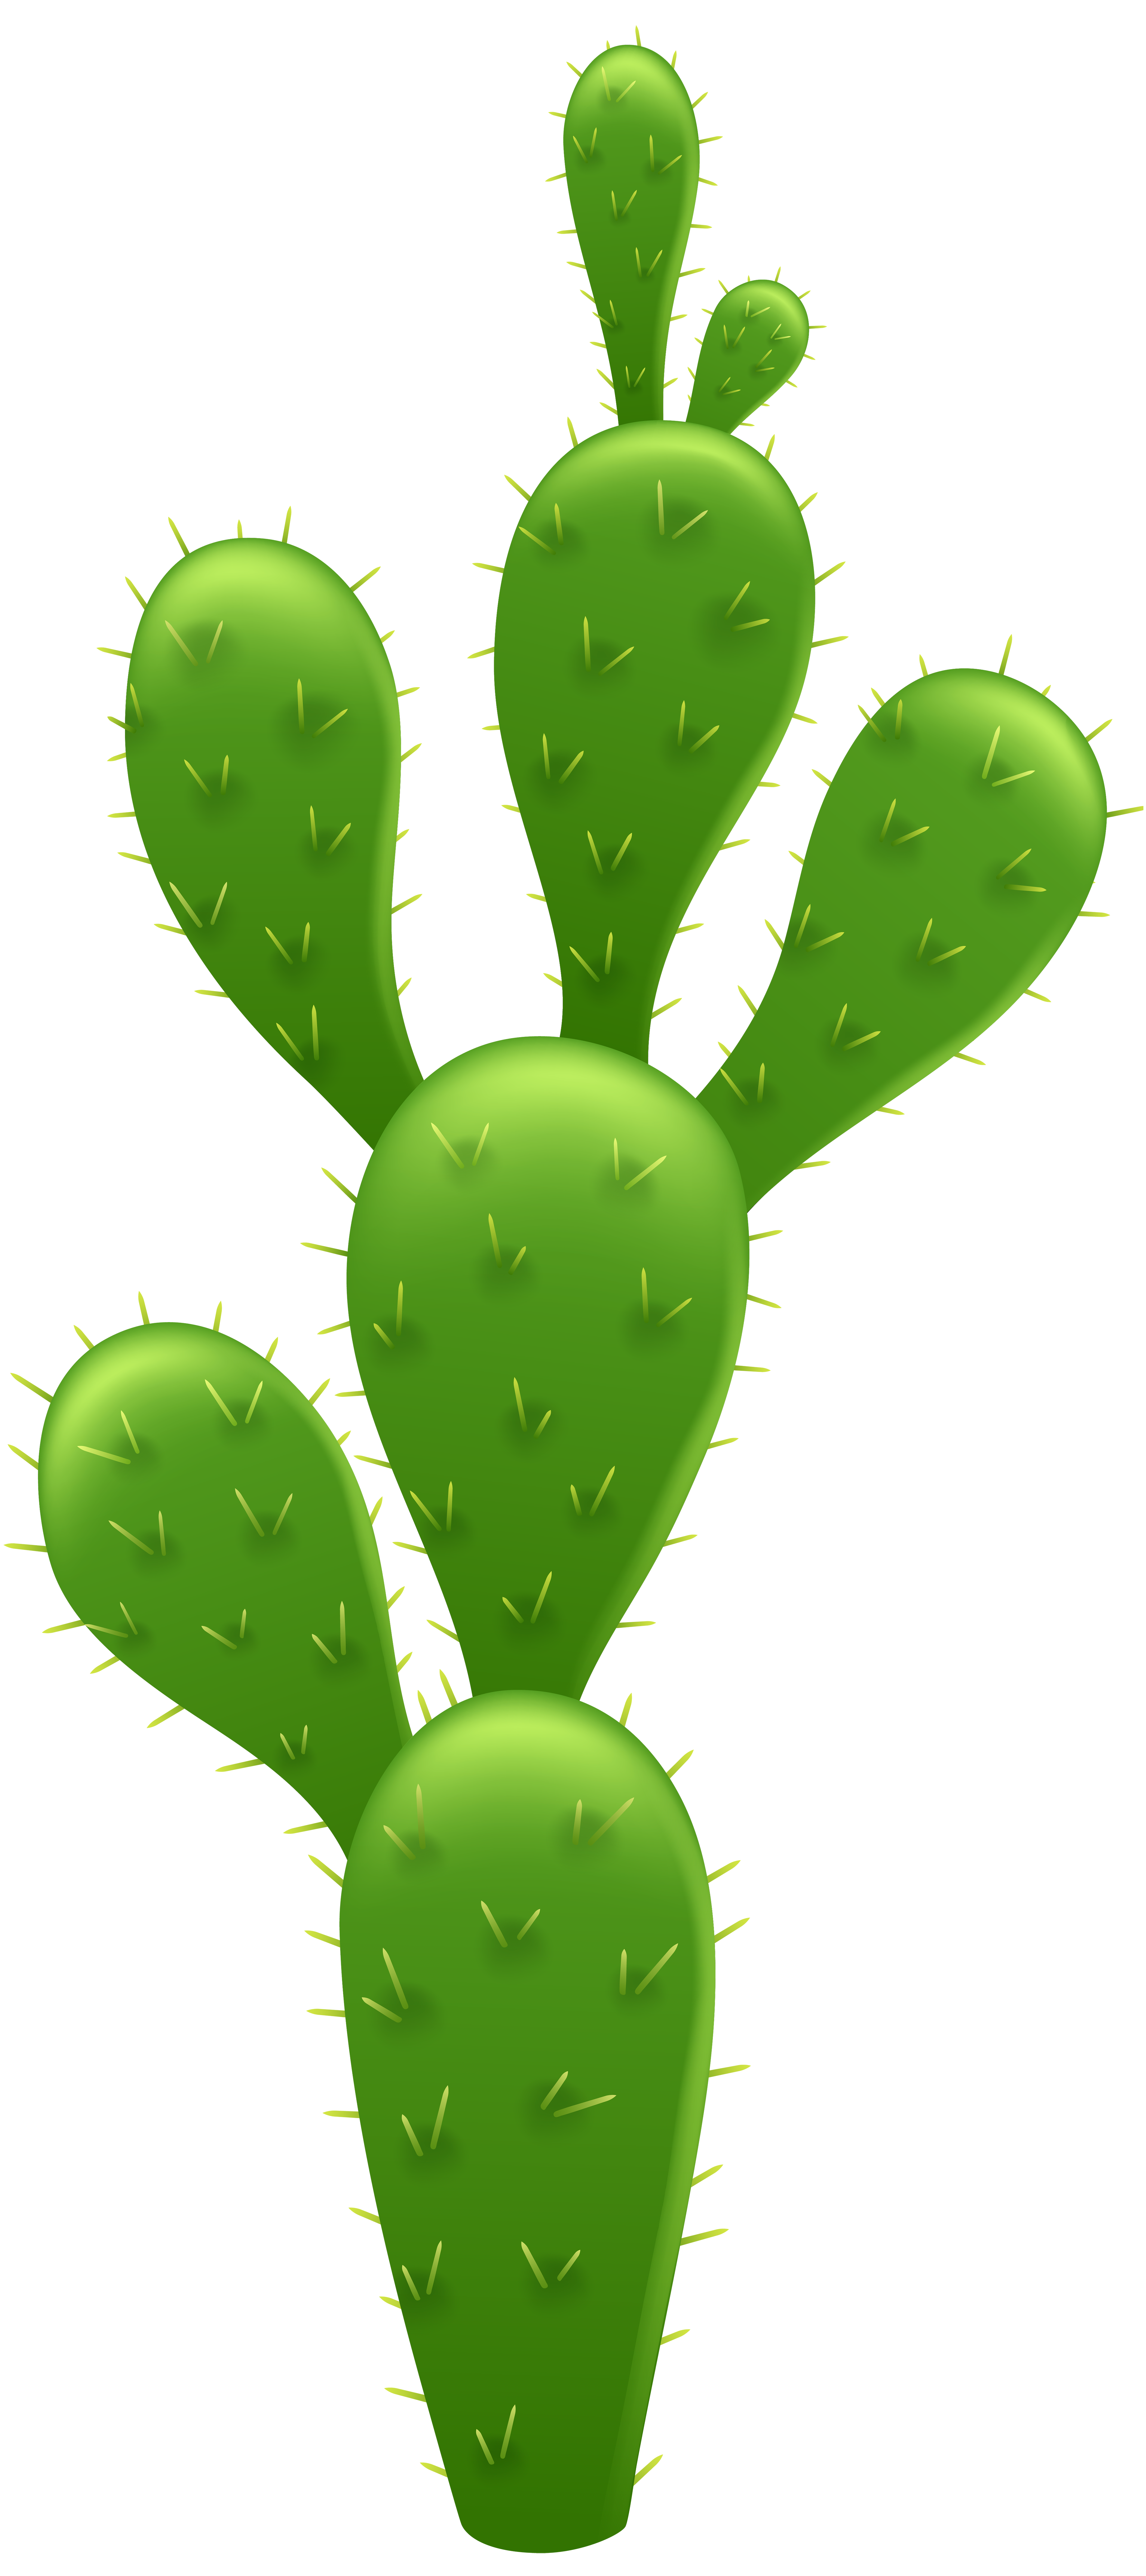 Desert clipart prickly pear. Cactus transparent png clip